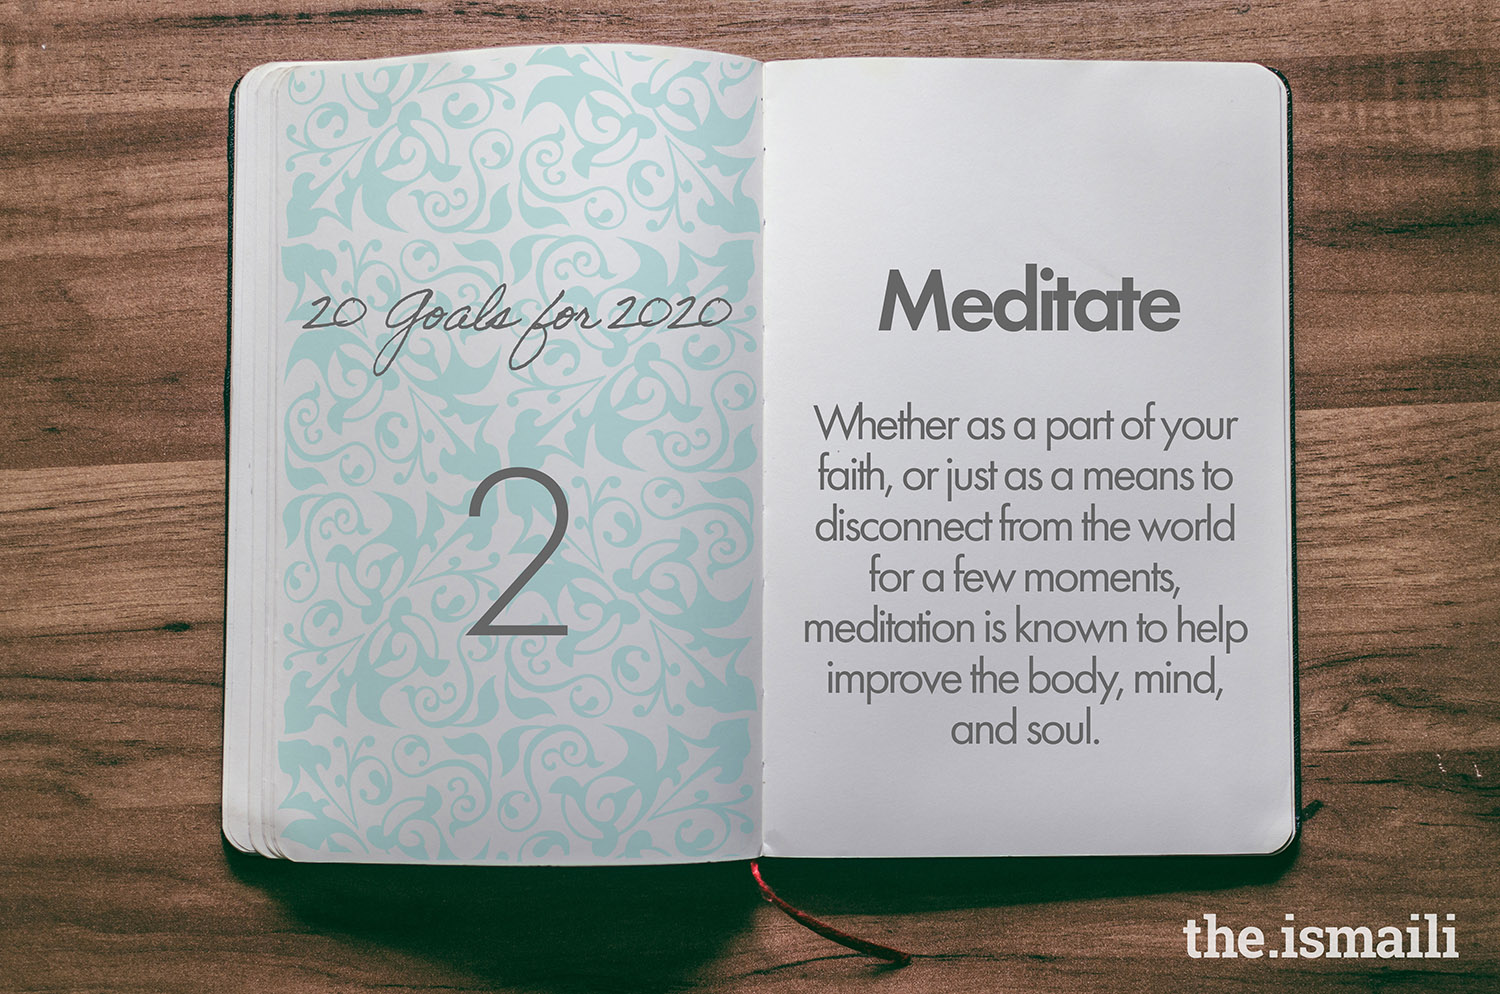 Goal 2: Meditate